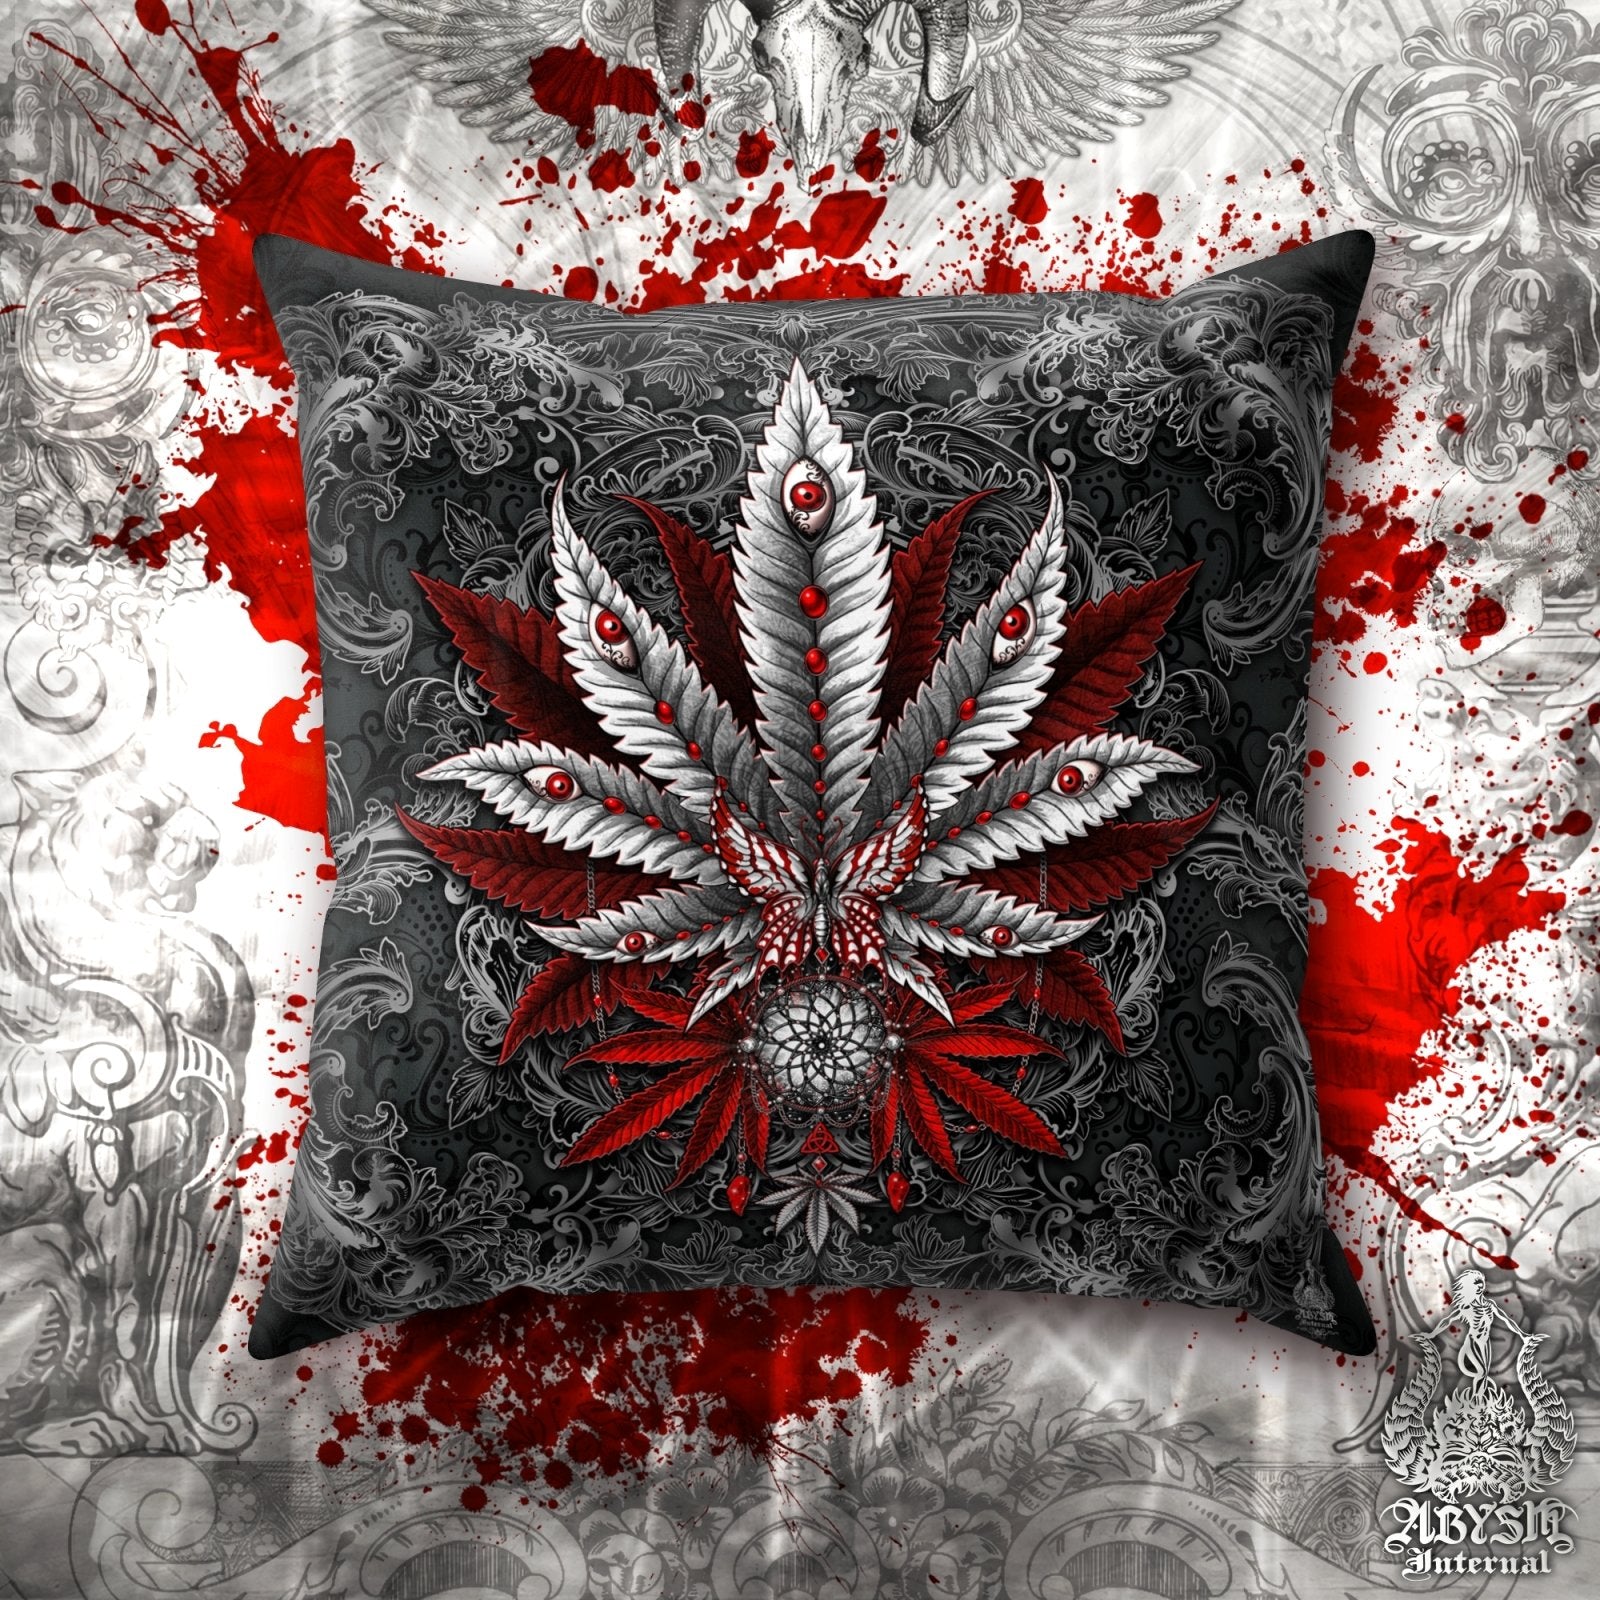 Gothic Weed Throw Pillow, Cannabis Shop Decor, Decorative Accent Cushion, Alternative Room Decor, 420 Art Print - Dark - Abysm Internal